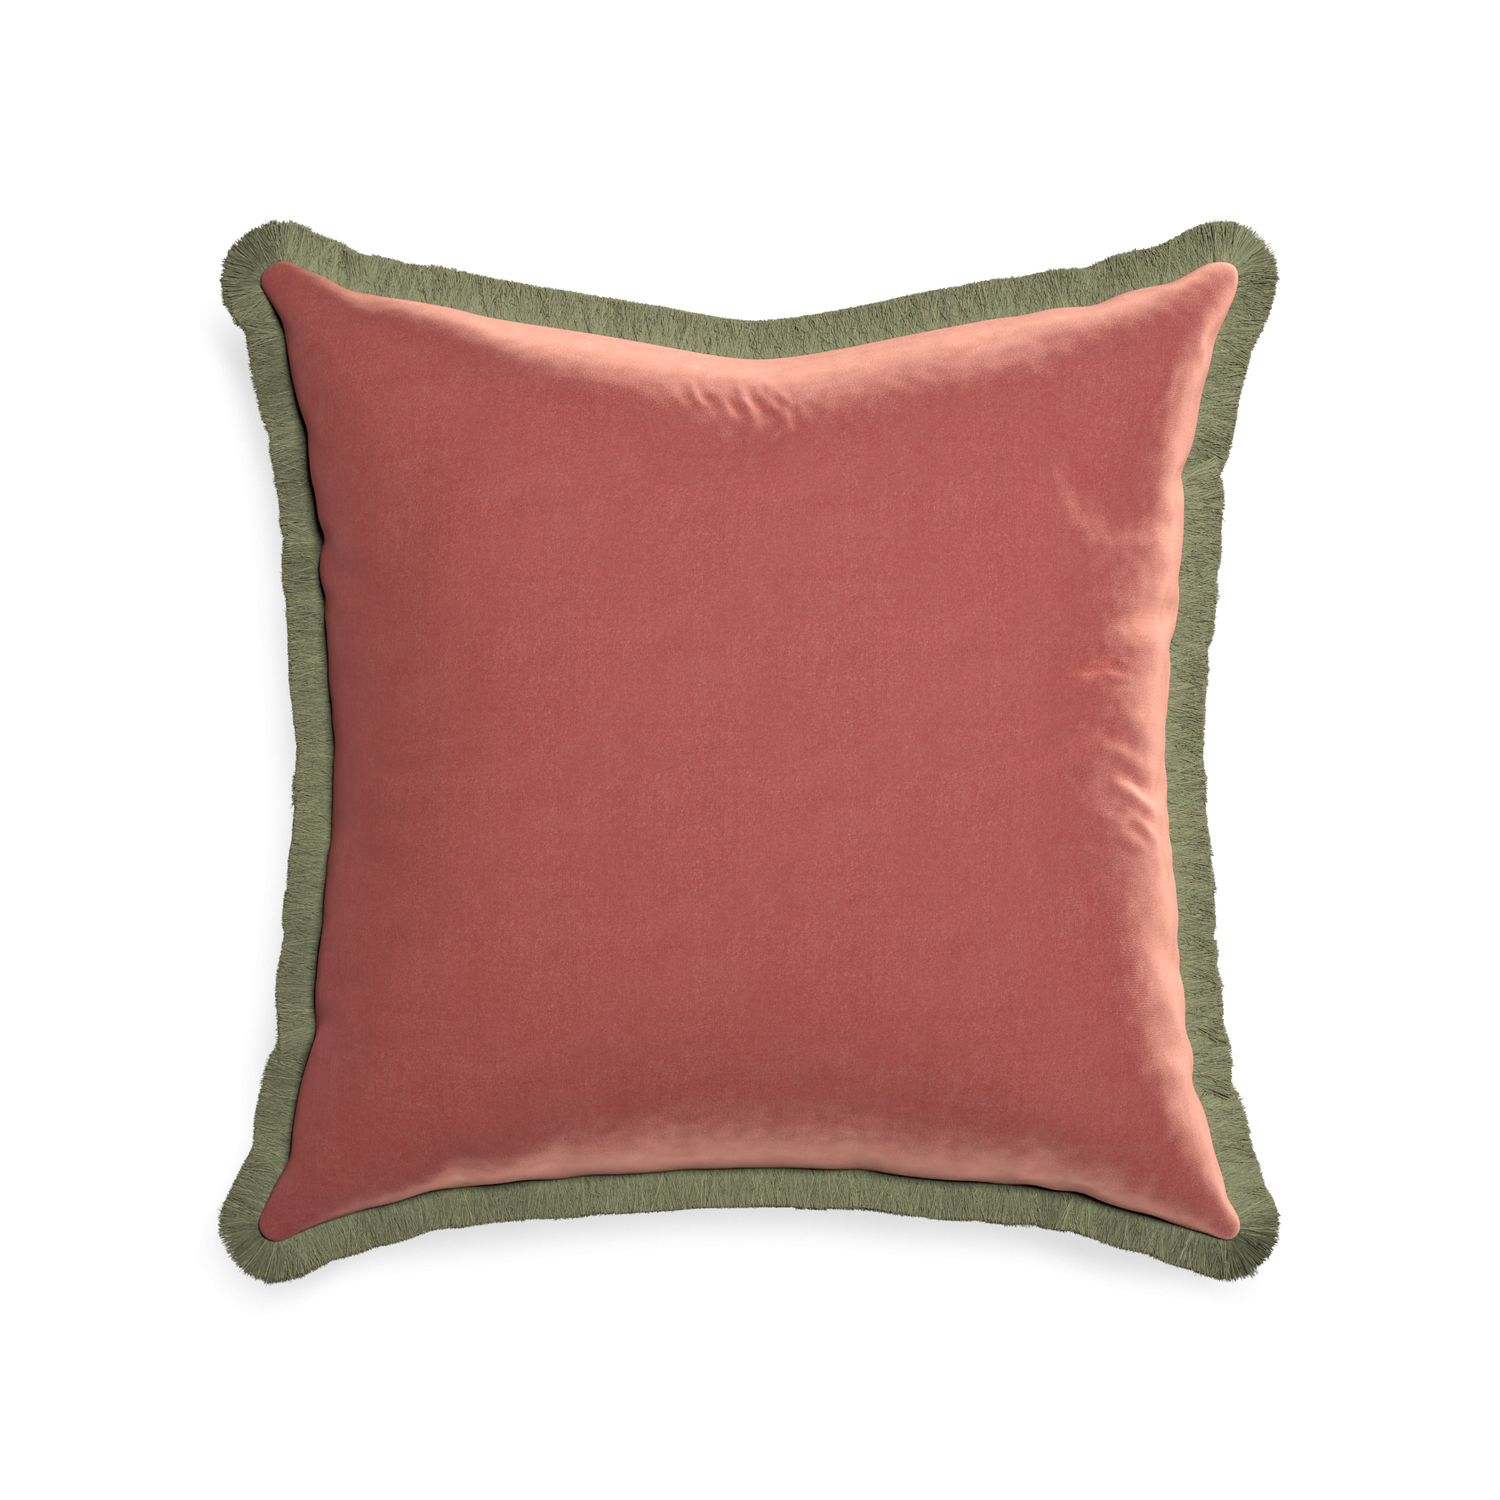 square coral velvet pillow with sage green fringe